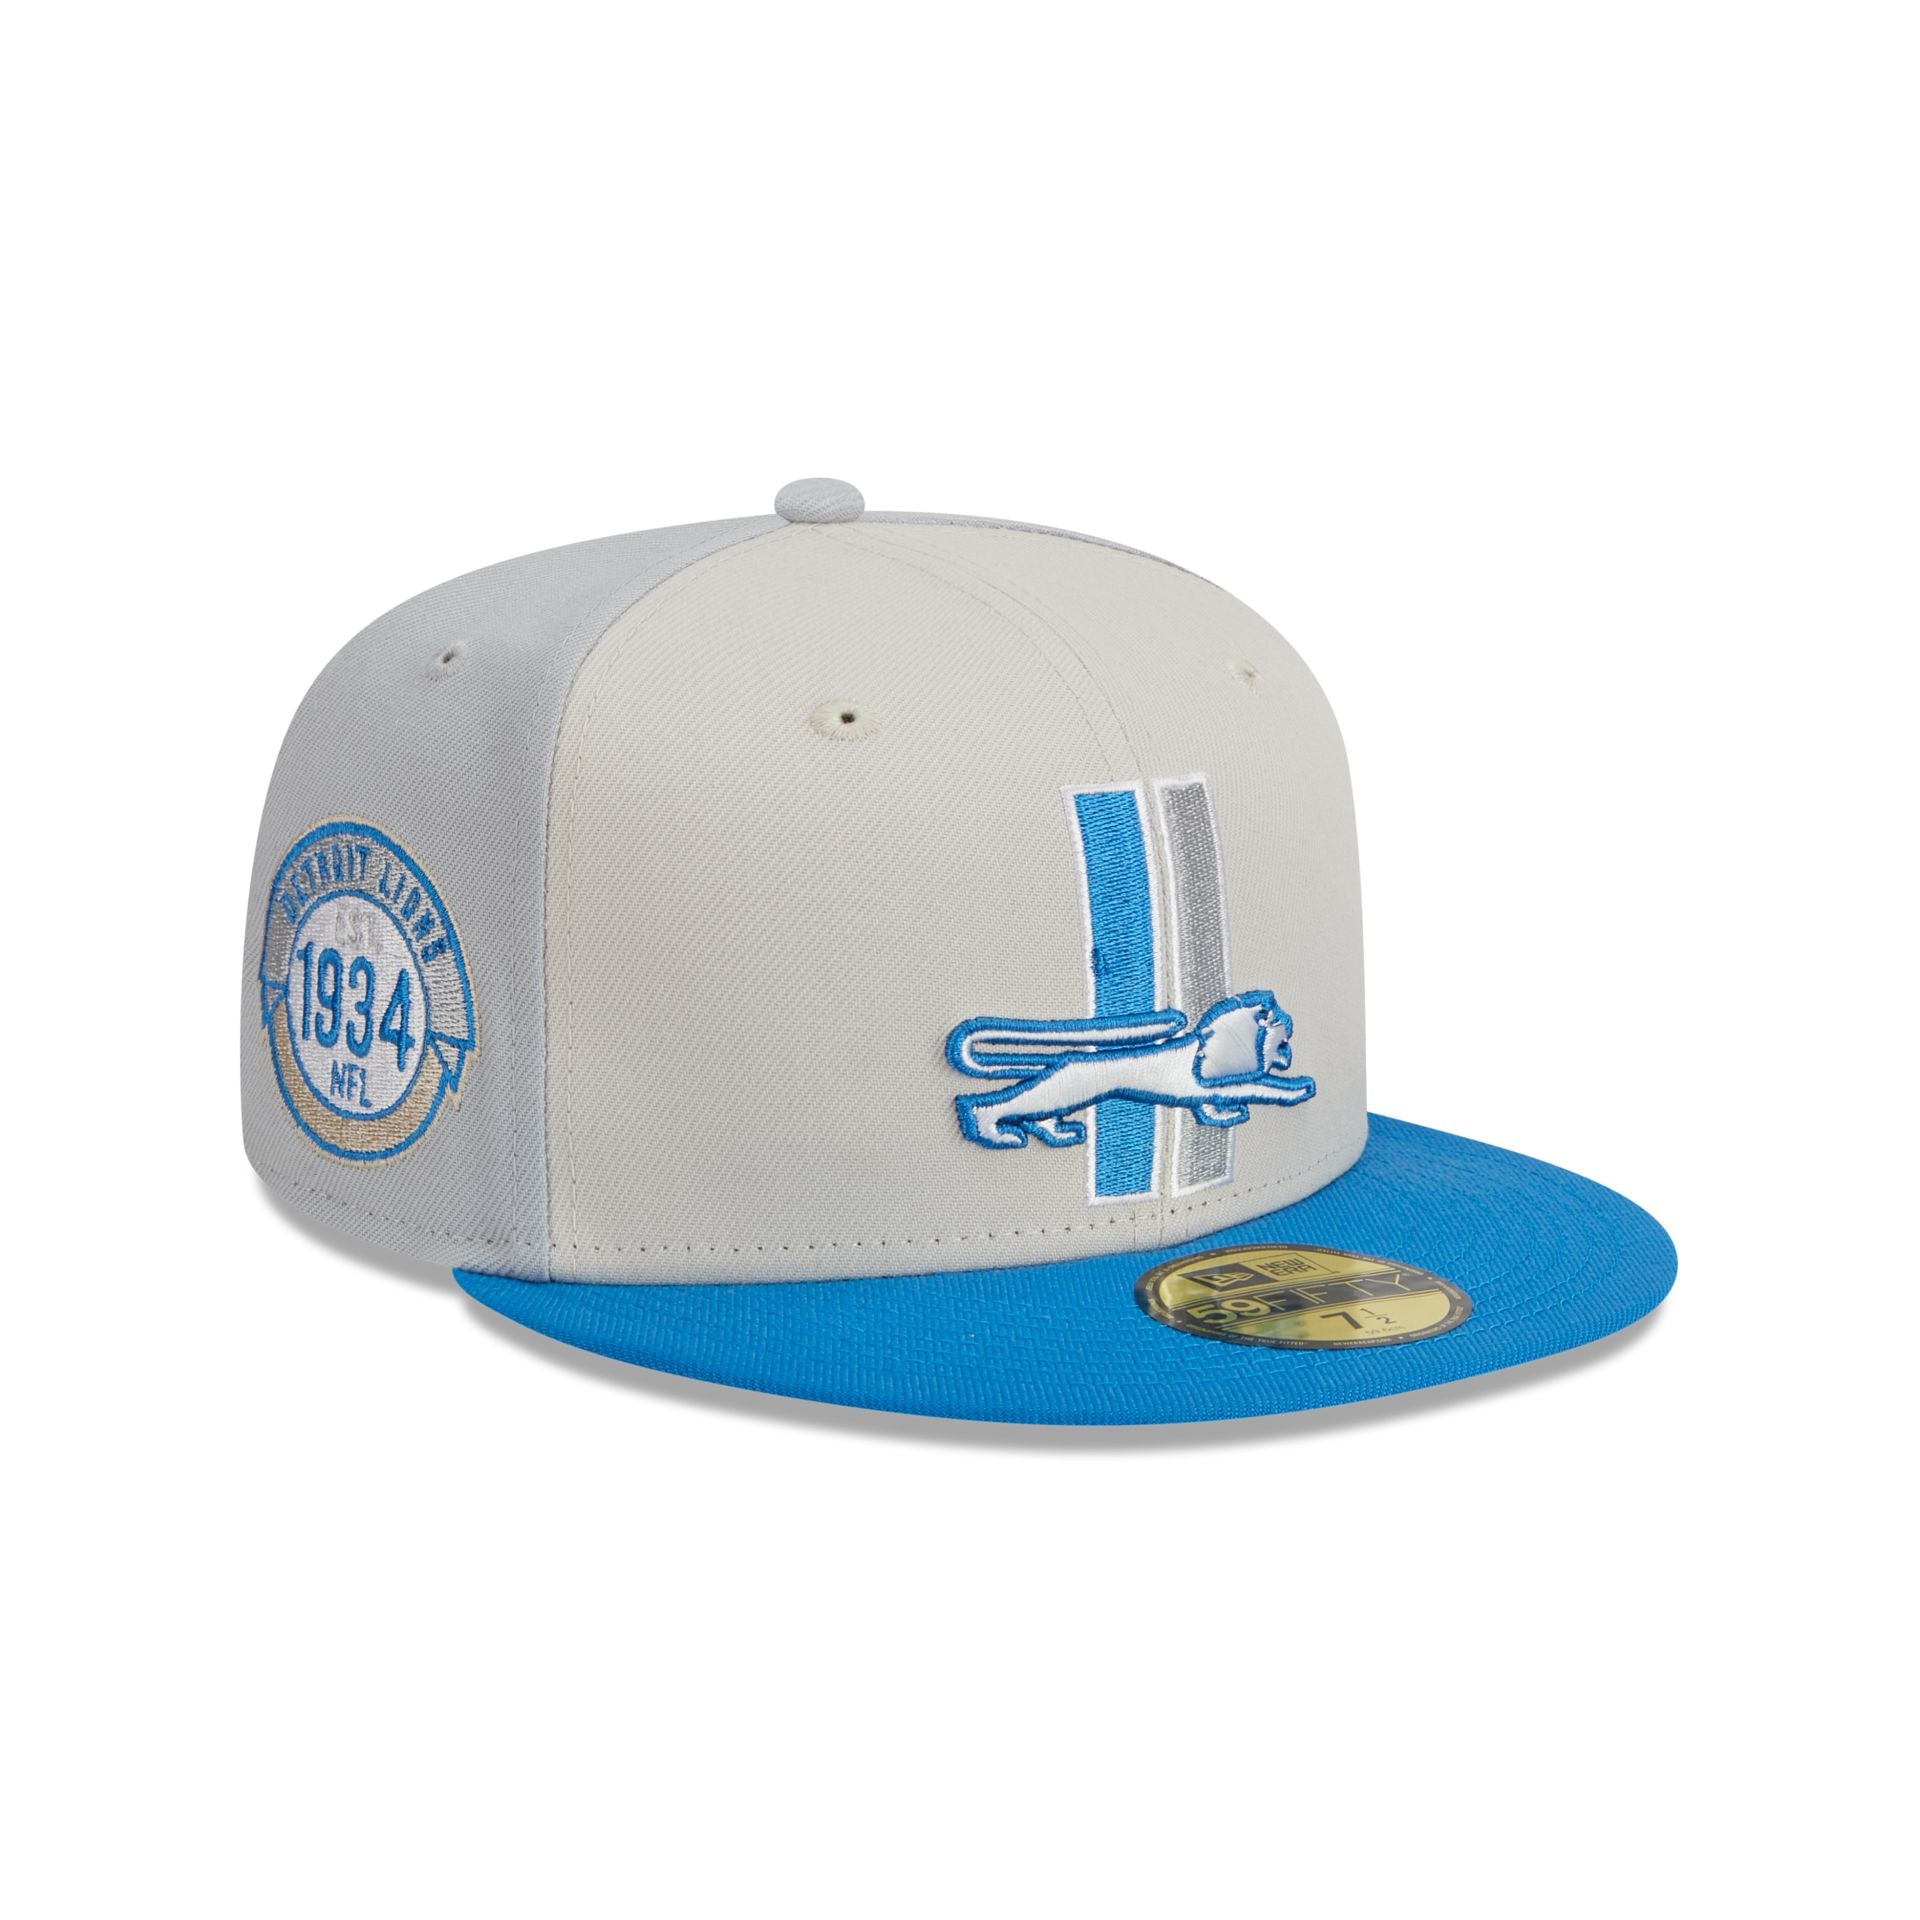 New Era Men's Detroit Lions Logo Blue 59Fifty Fitted Hat